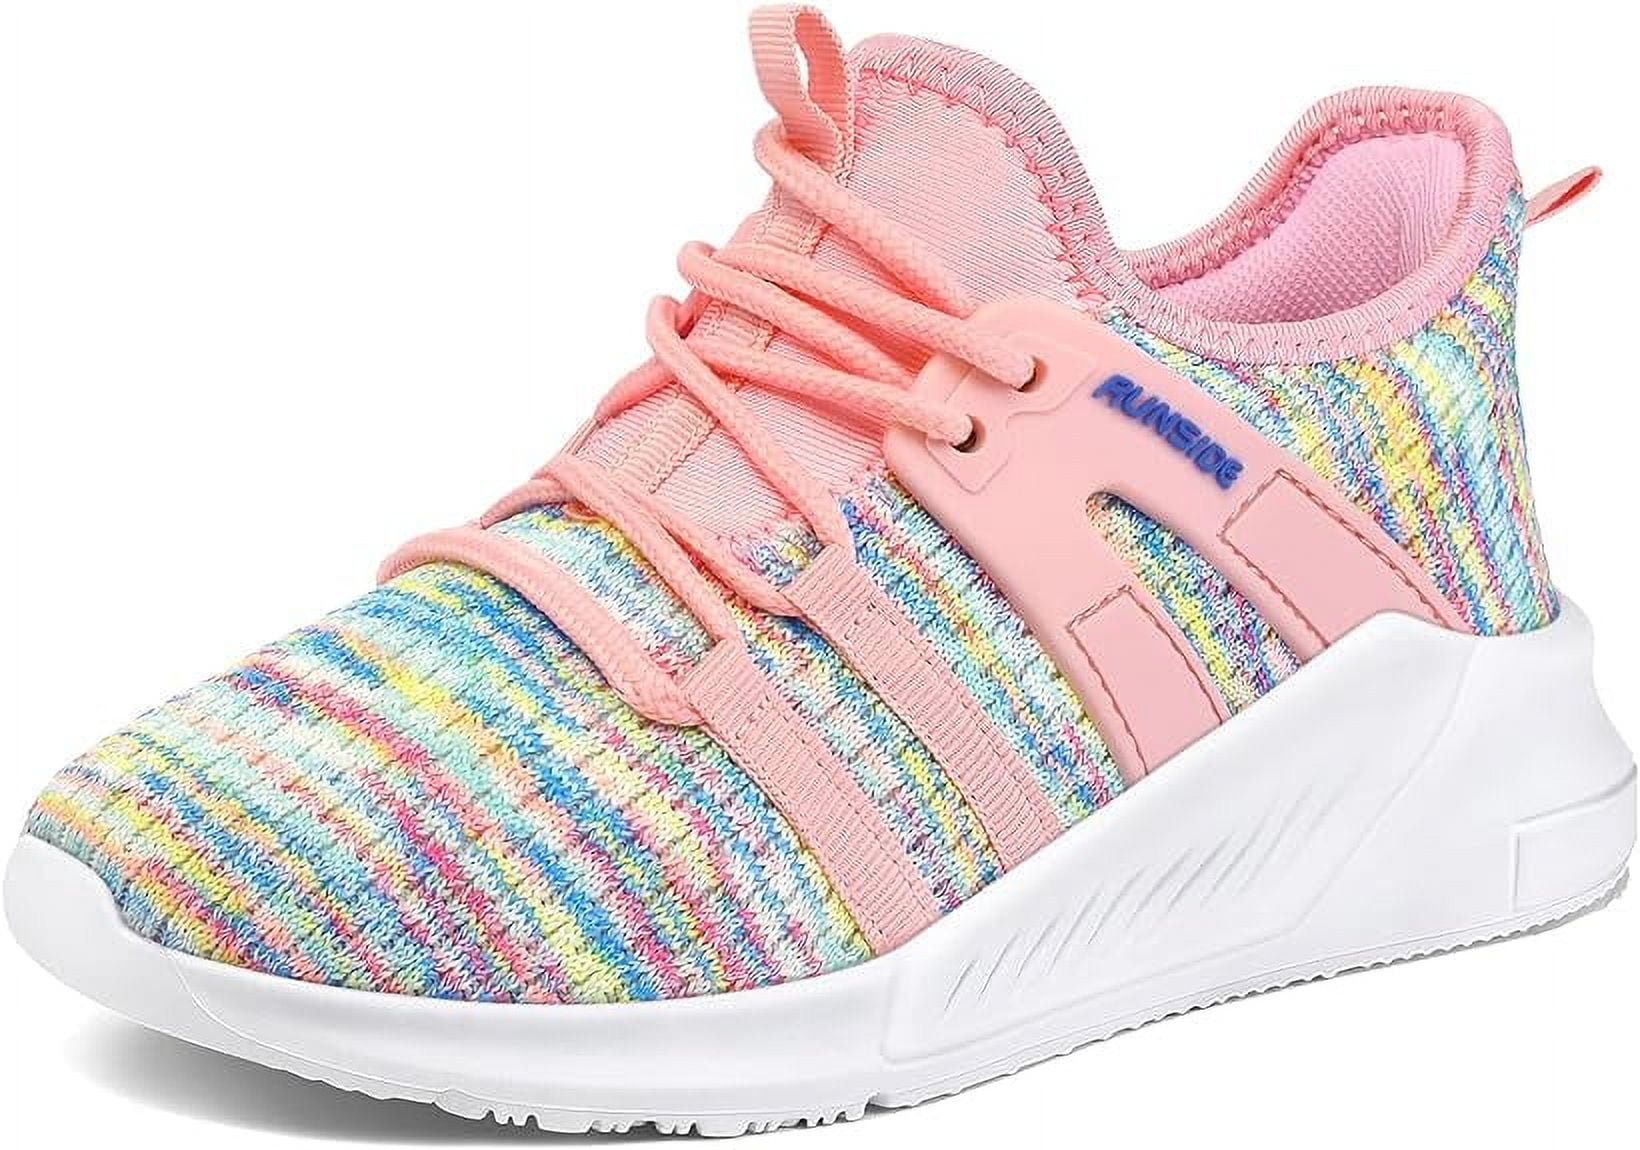 Adidas Toddler Girl Sz. 12 Samoa Lace Up Sneaker. Cute, rainbow